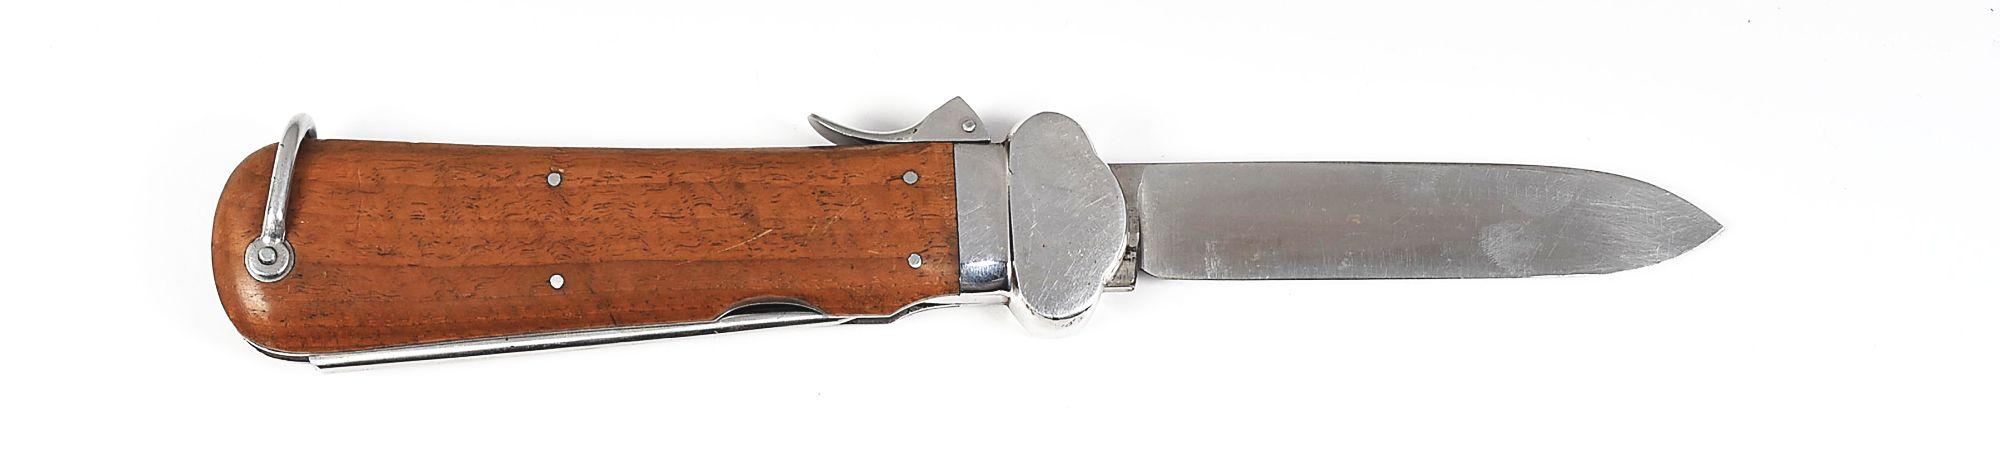 GERMAN WWII LUFTWAFFE FIRST MODEL GRAVITY KNIFE BY SMF.